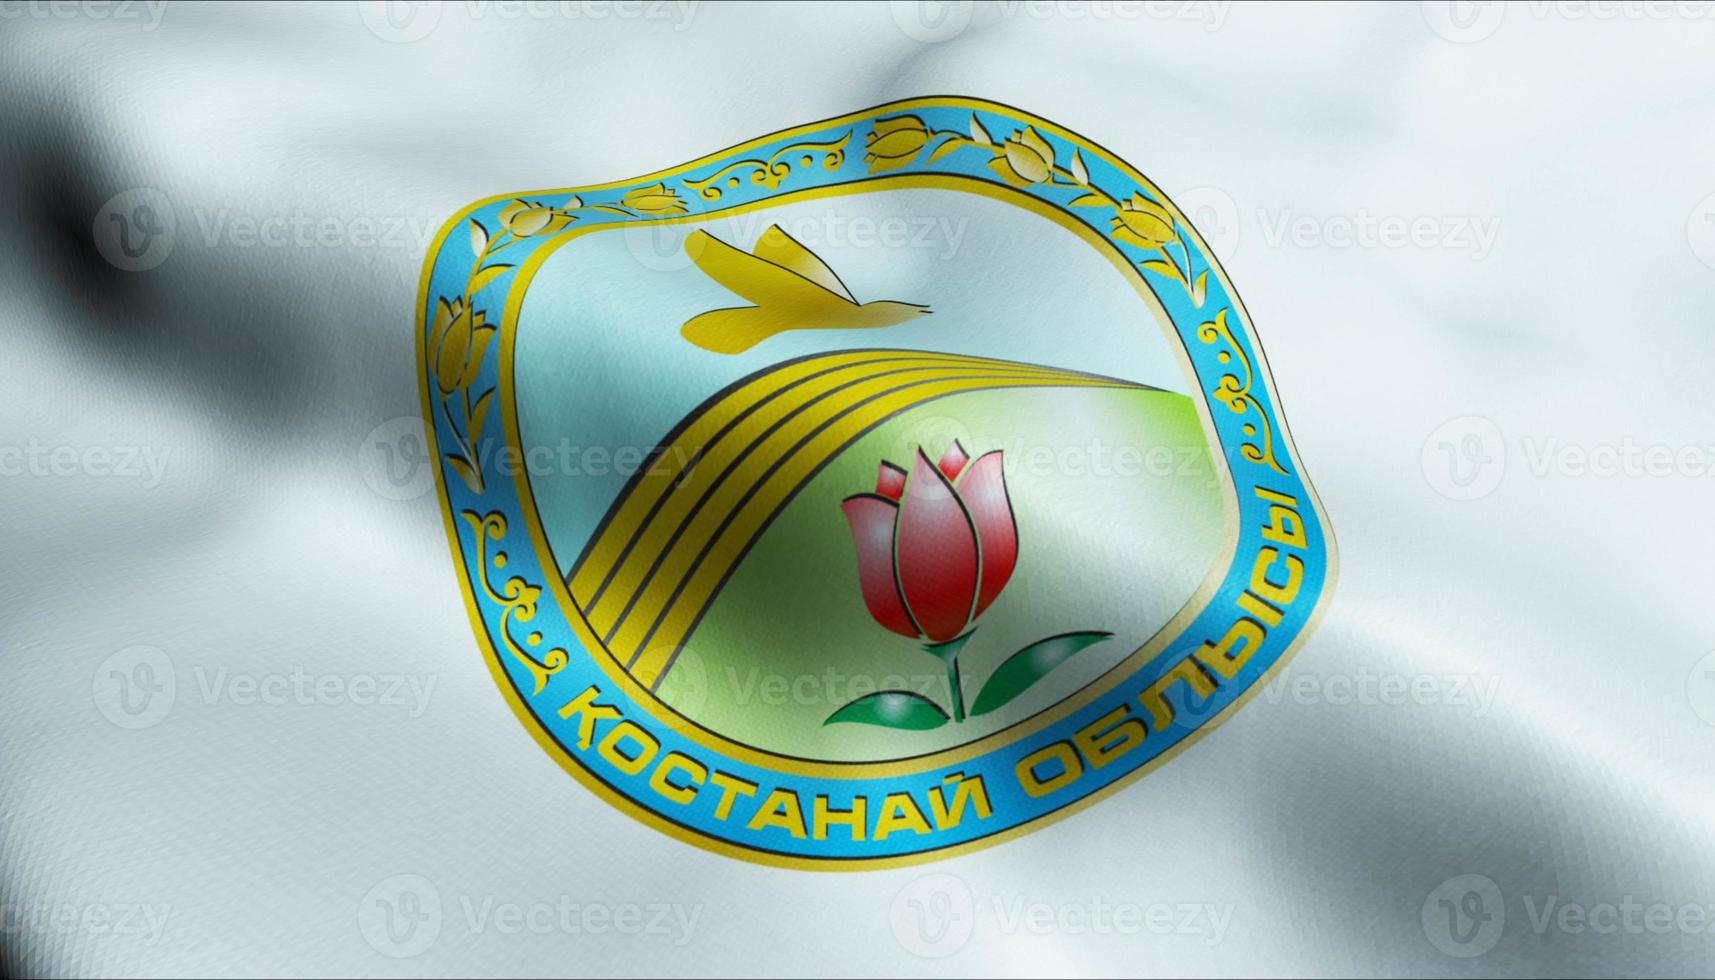 3d golvend Kazachstan regio vlag van kostanay detailopname visie foto